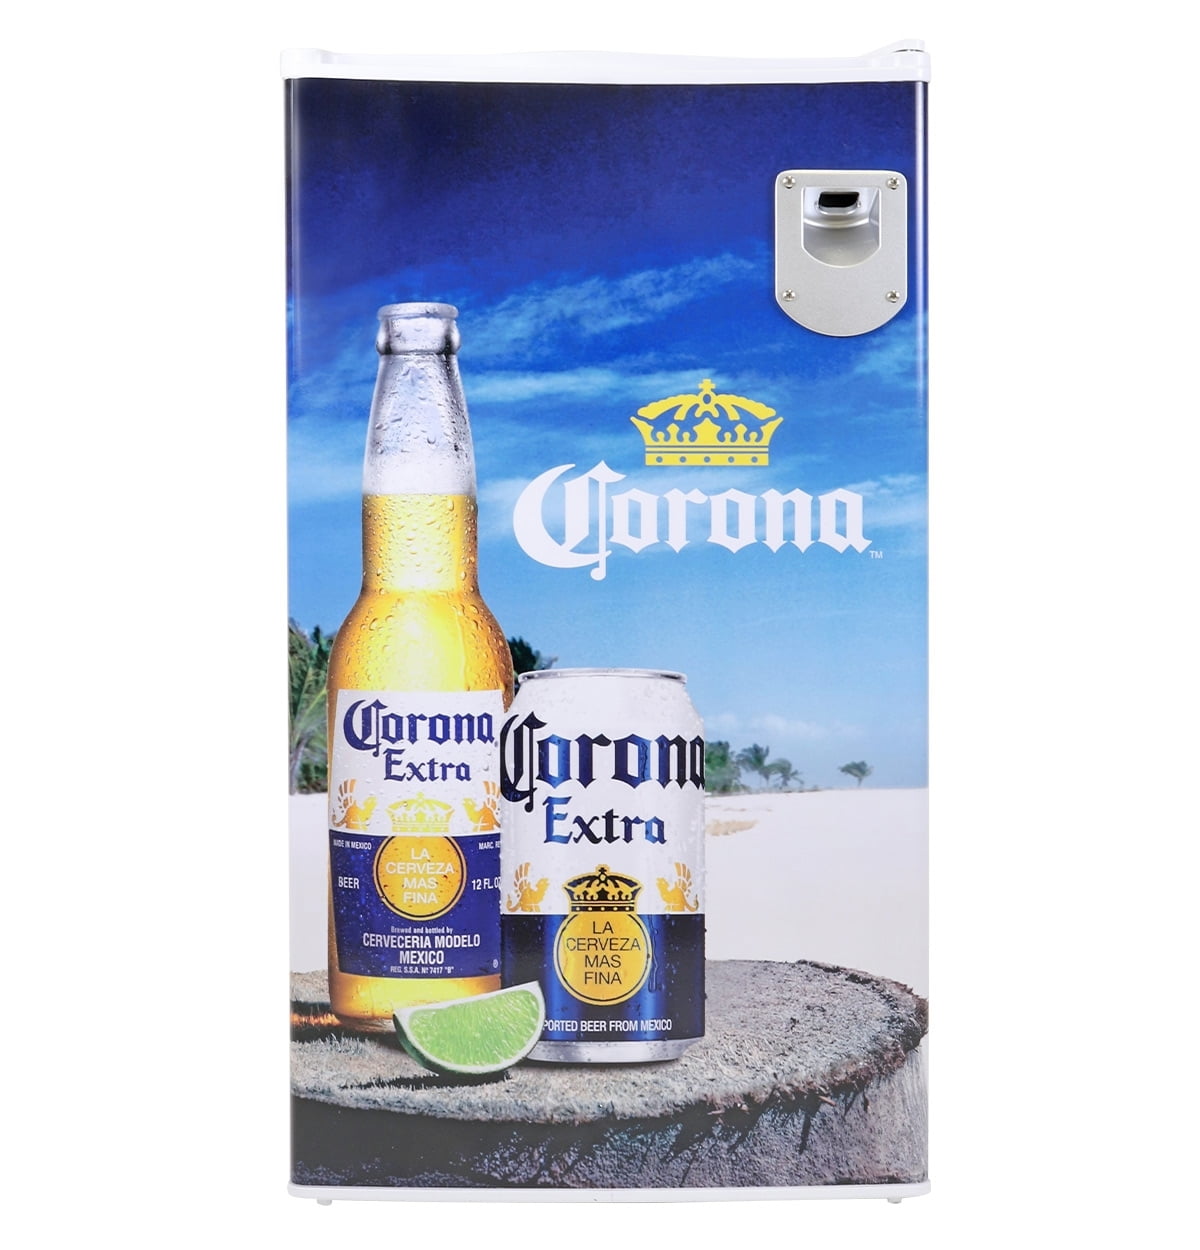 BRAND NEW Aluminium Corona Beer Cooler Box With Bottle Opener